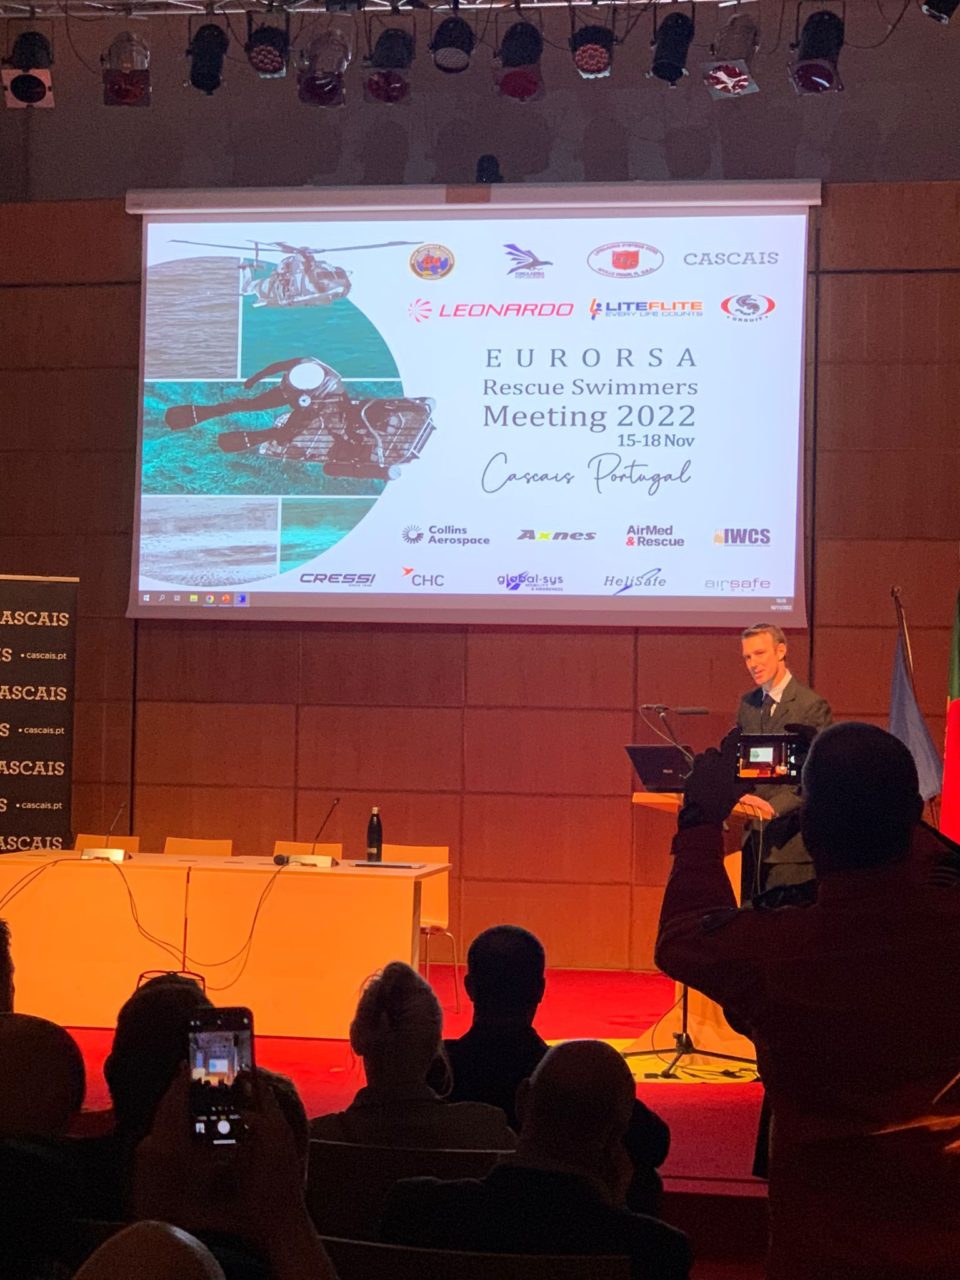 Eurorsa Rescue Swimmer Meeting 2022, Cascais, Portugal